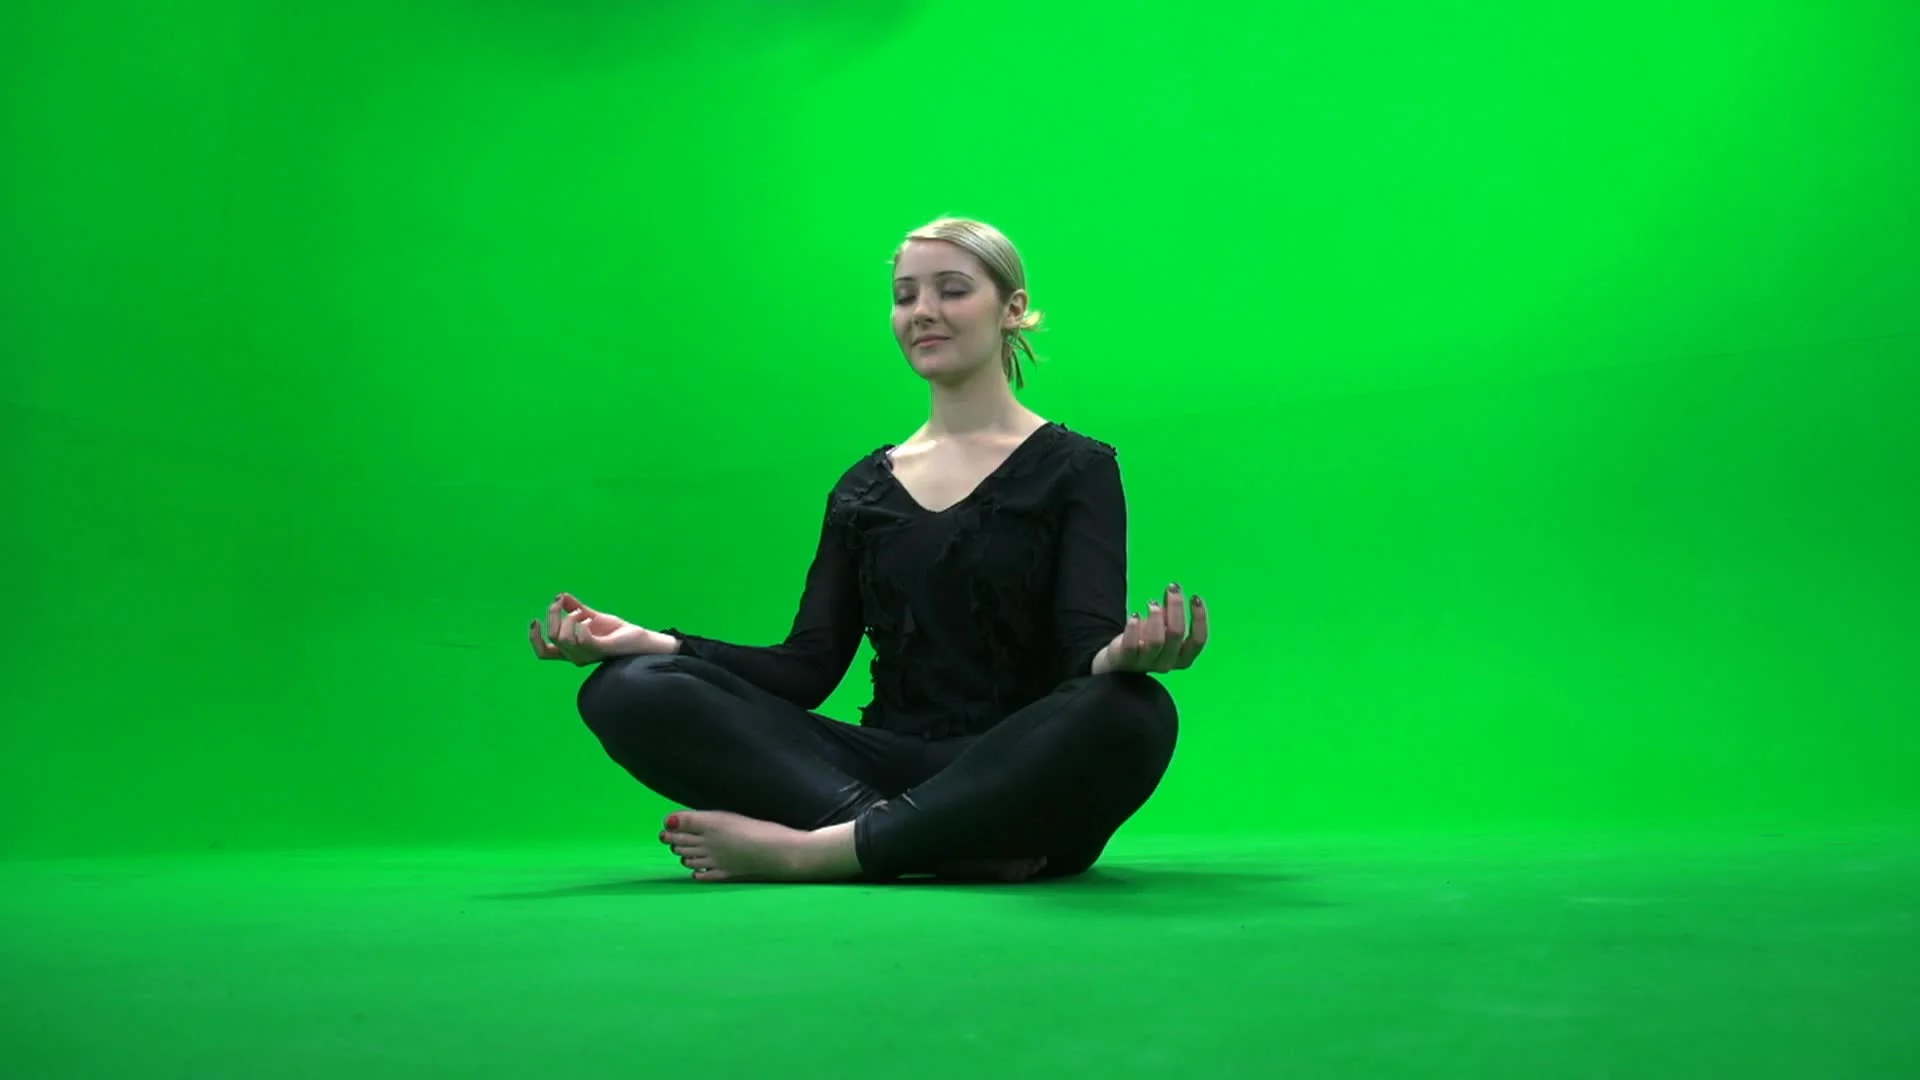 https://images.pond5.com/yoga-isolated-green-screen-024583179_prevstill.jpeg